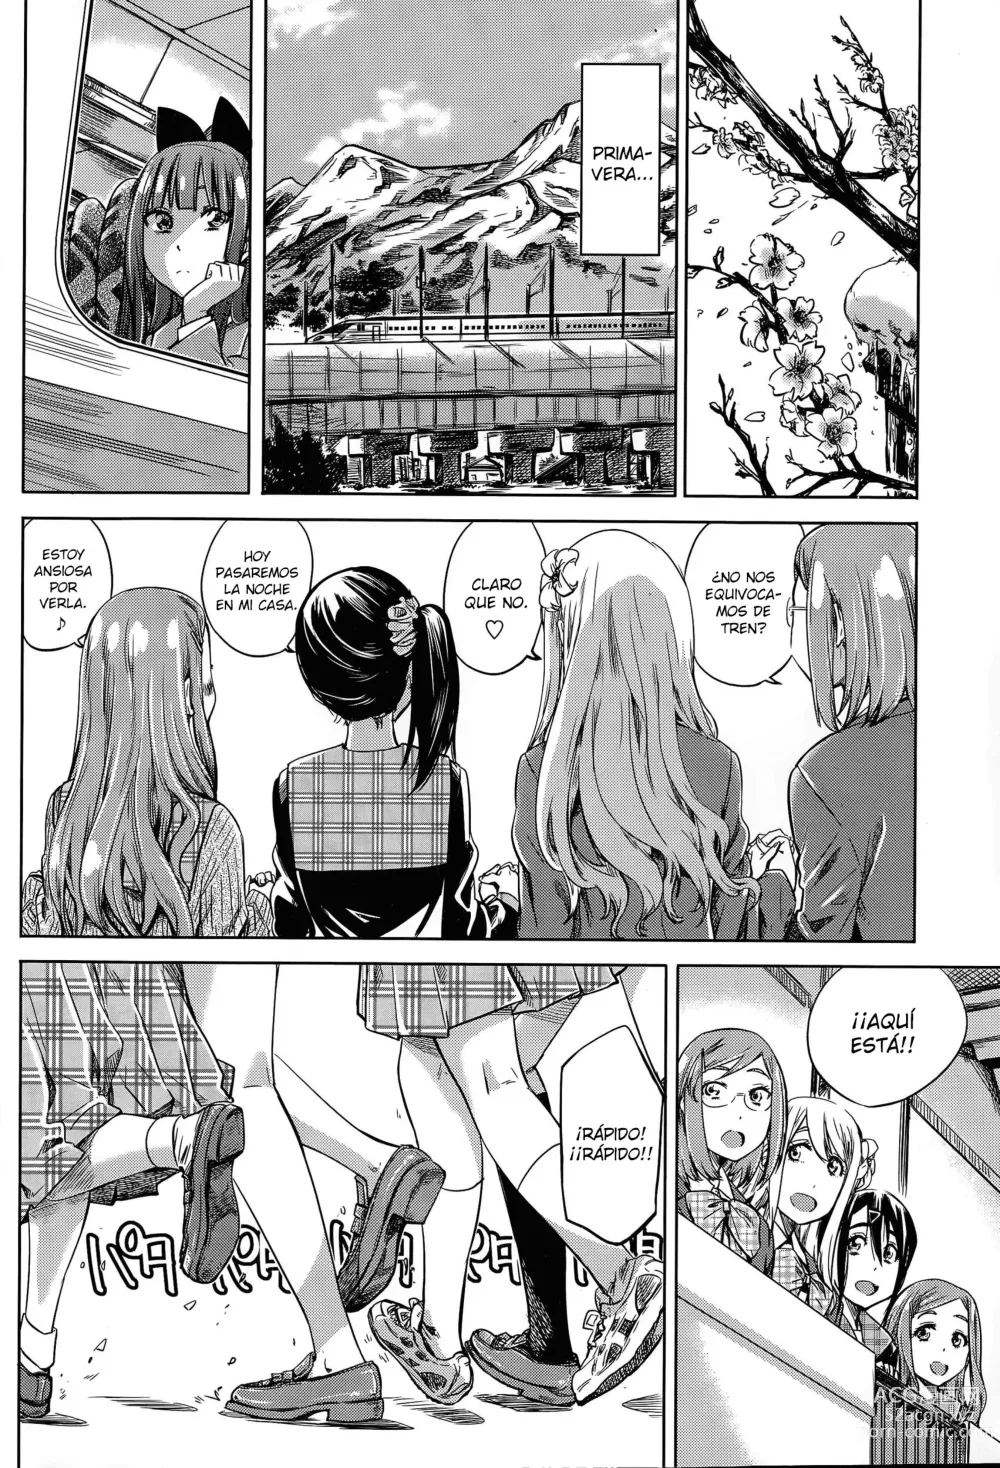 Page 144 of manga Nadeshiko Hiyori